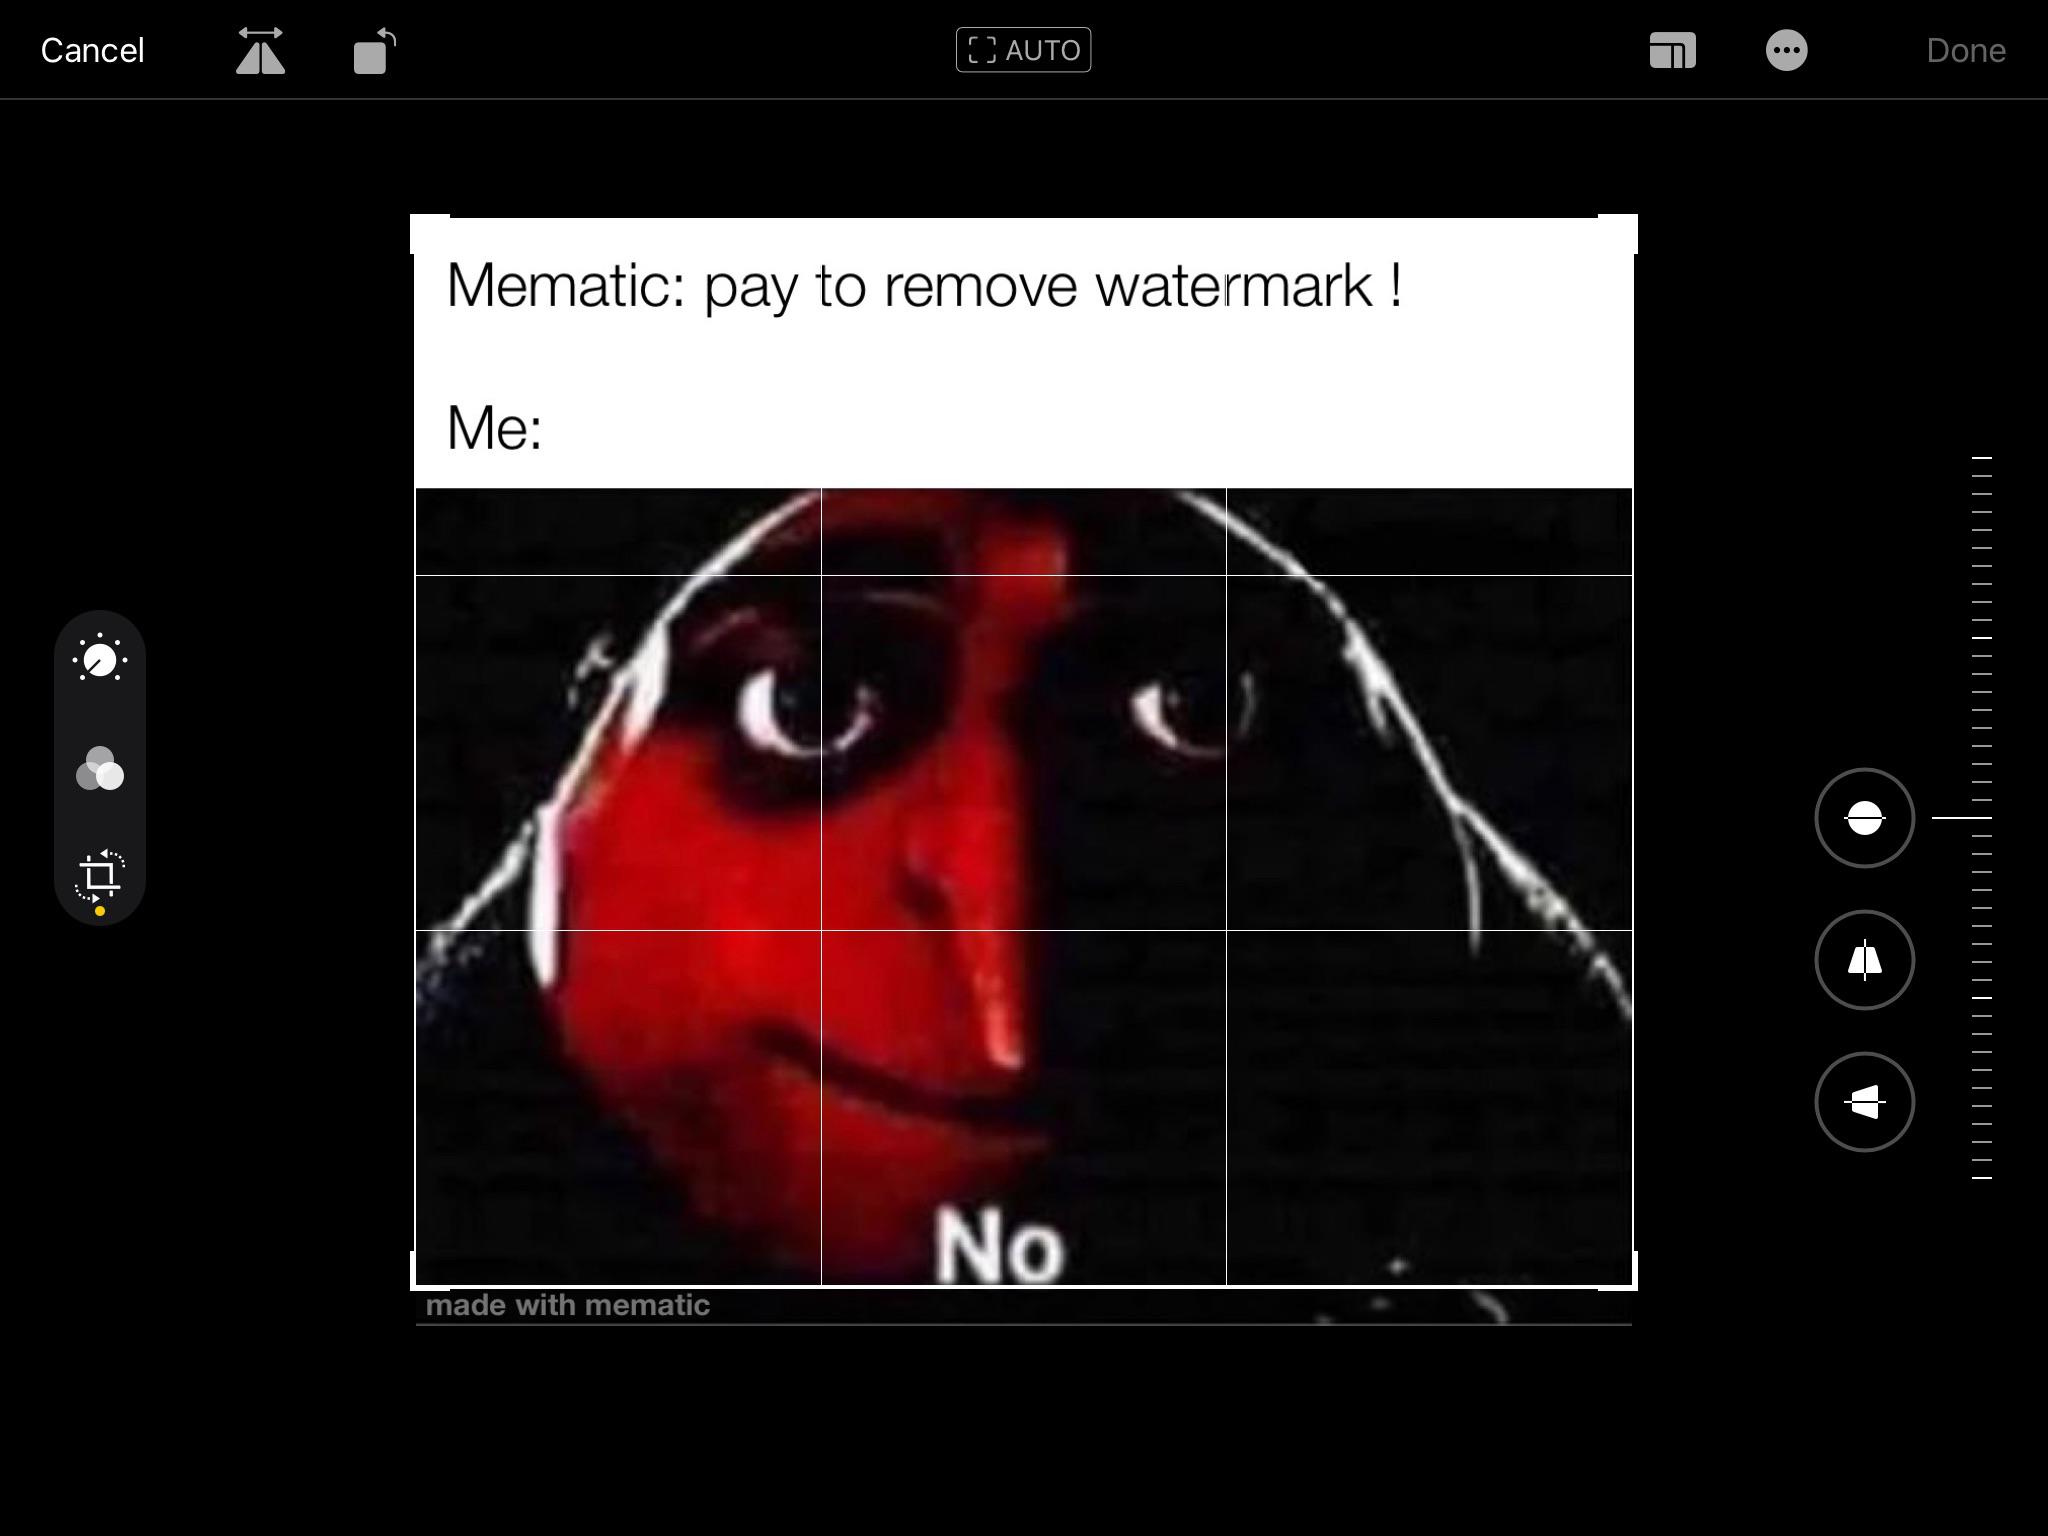 iphone 12 memes - Cancel Auto ... Done Mematic pay to remove watermark ! Me Iiiiiiiiiii 4. i 14 |Iiii|||||||| No made with mematic